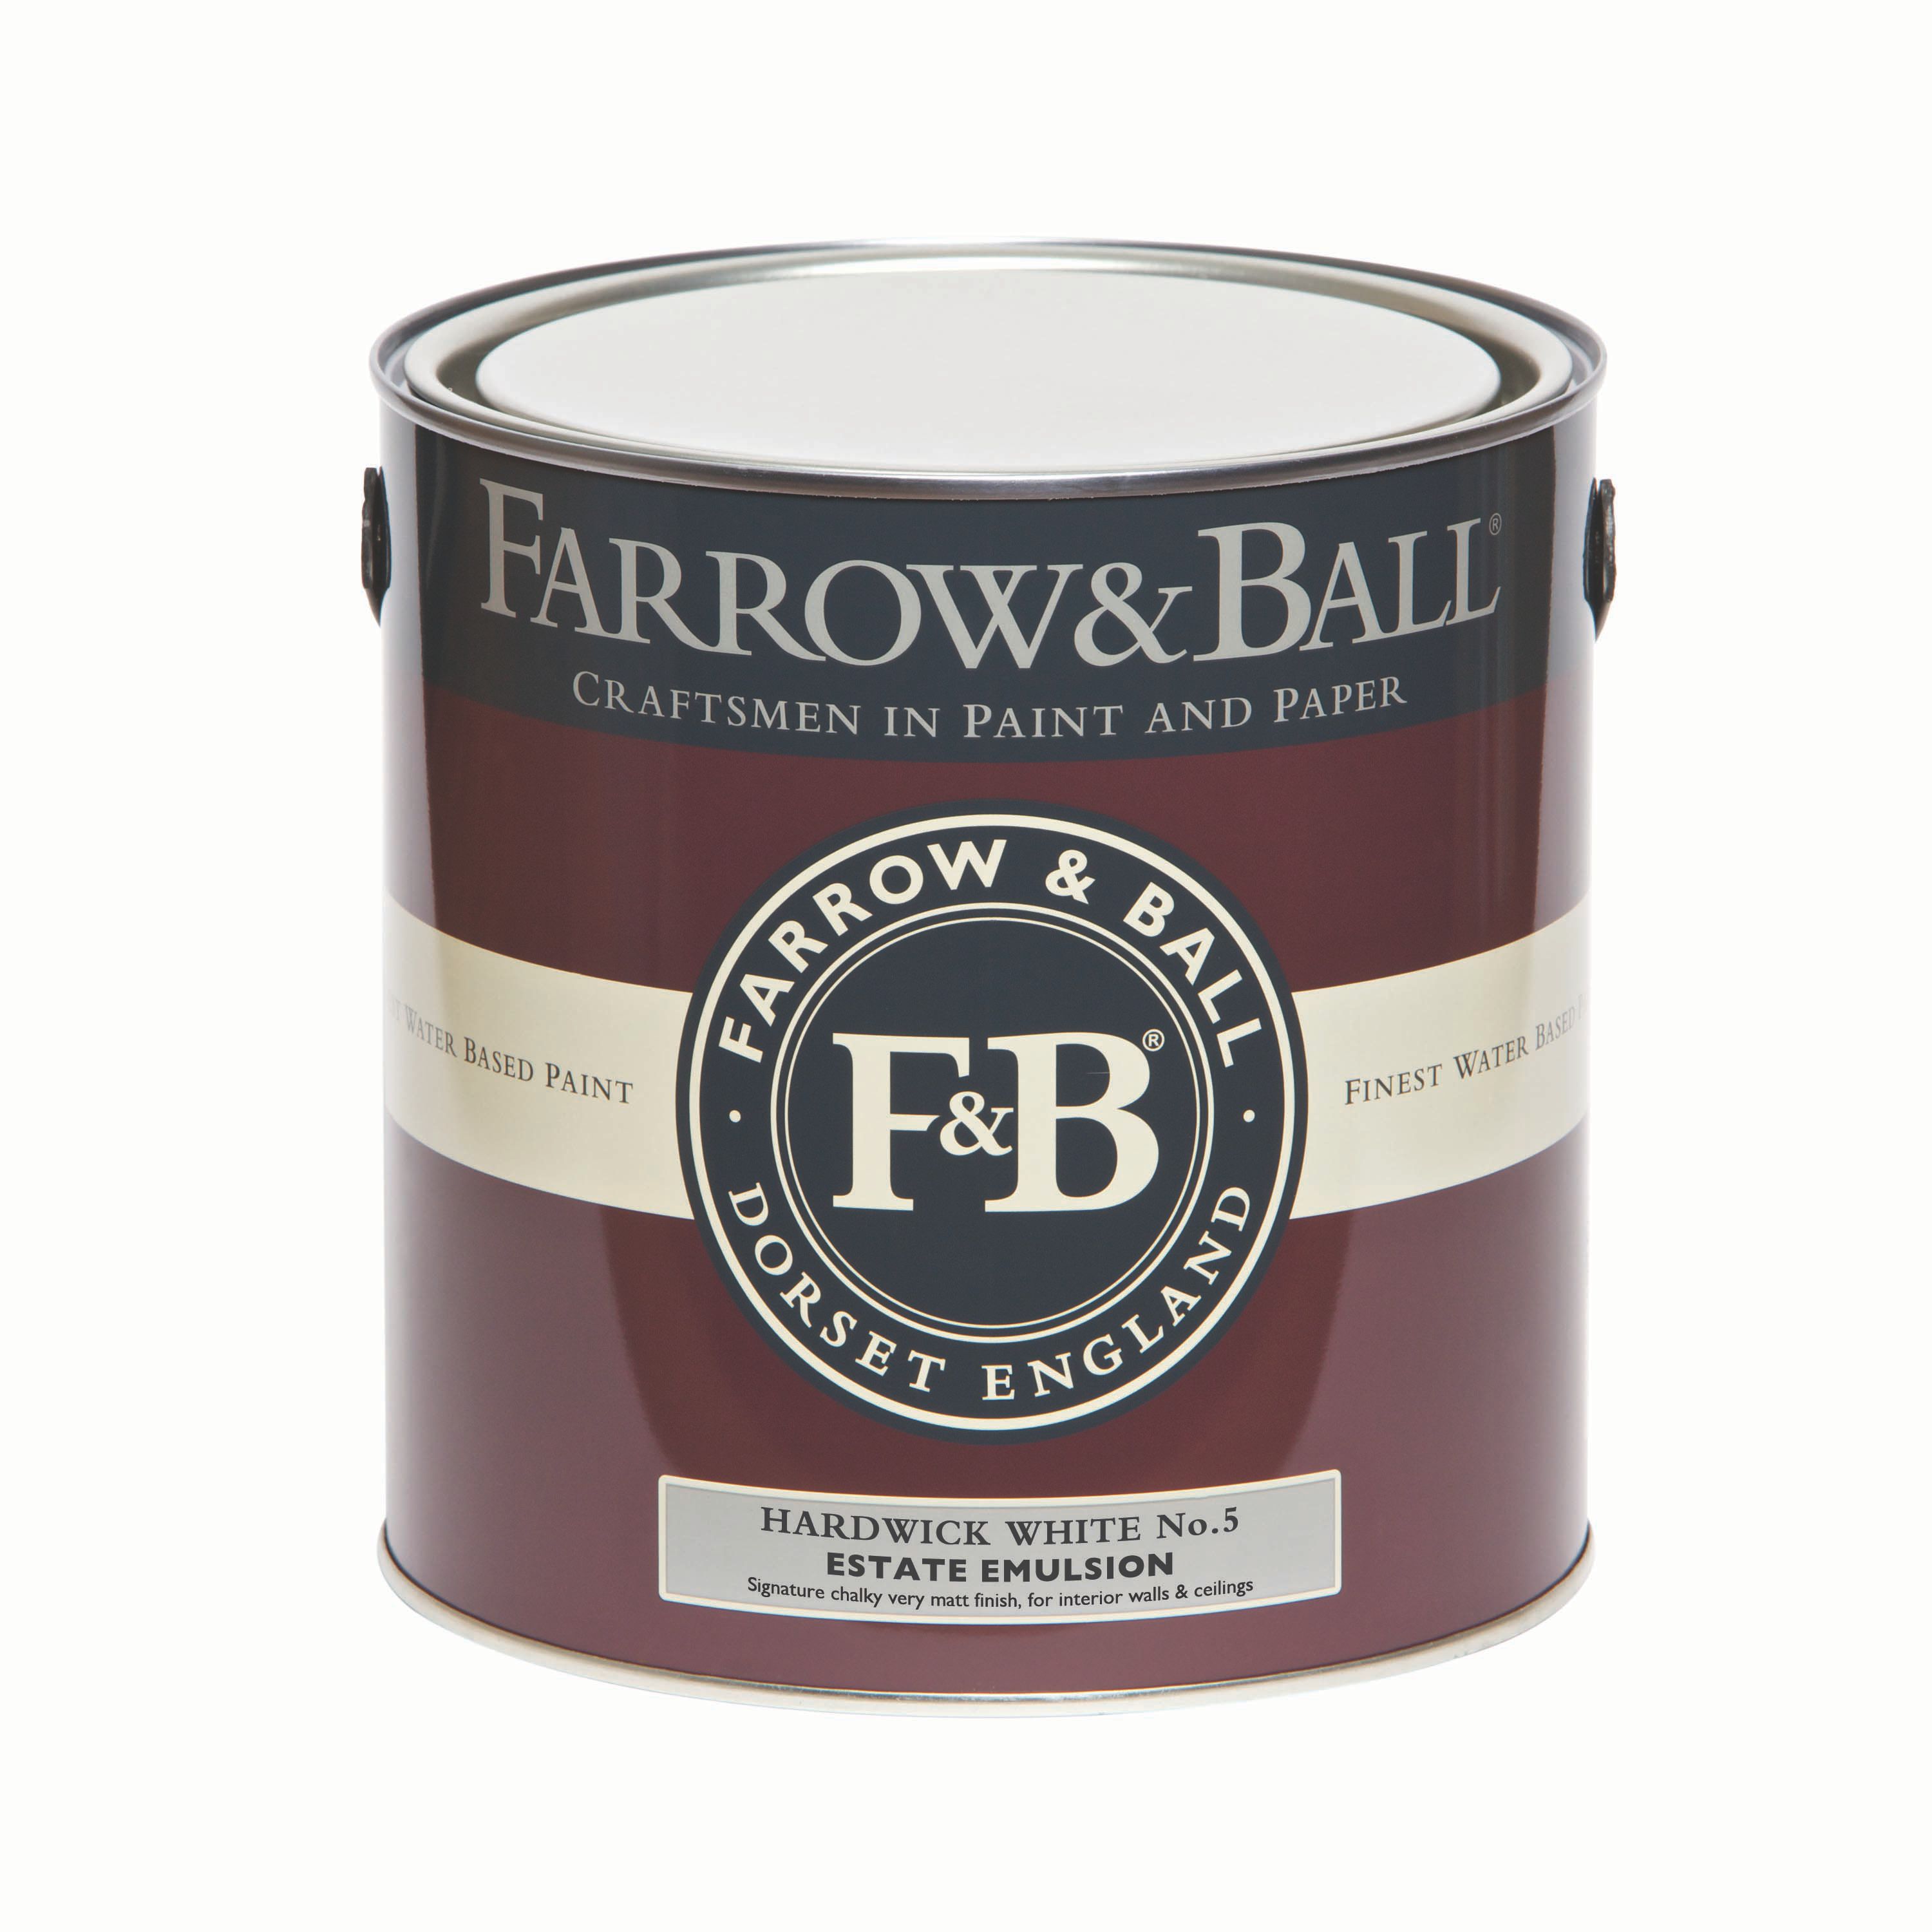 Farrow & Ball Estate Hardwick white No.5 Matt Emulsion paint, 2.5L